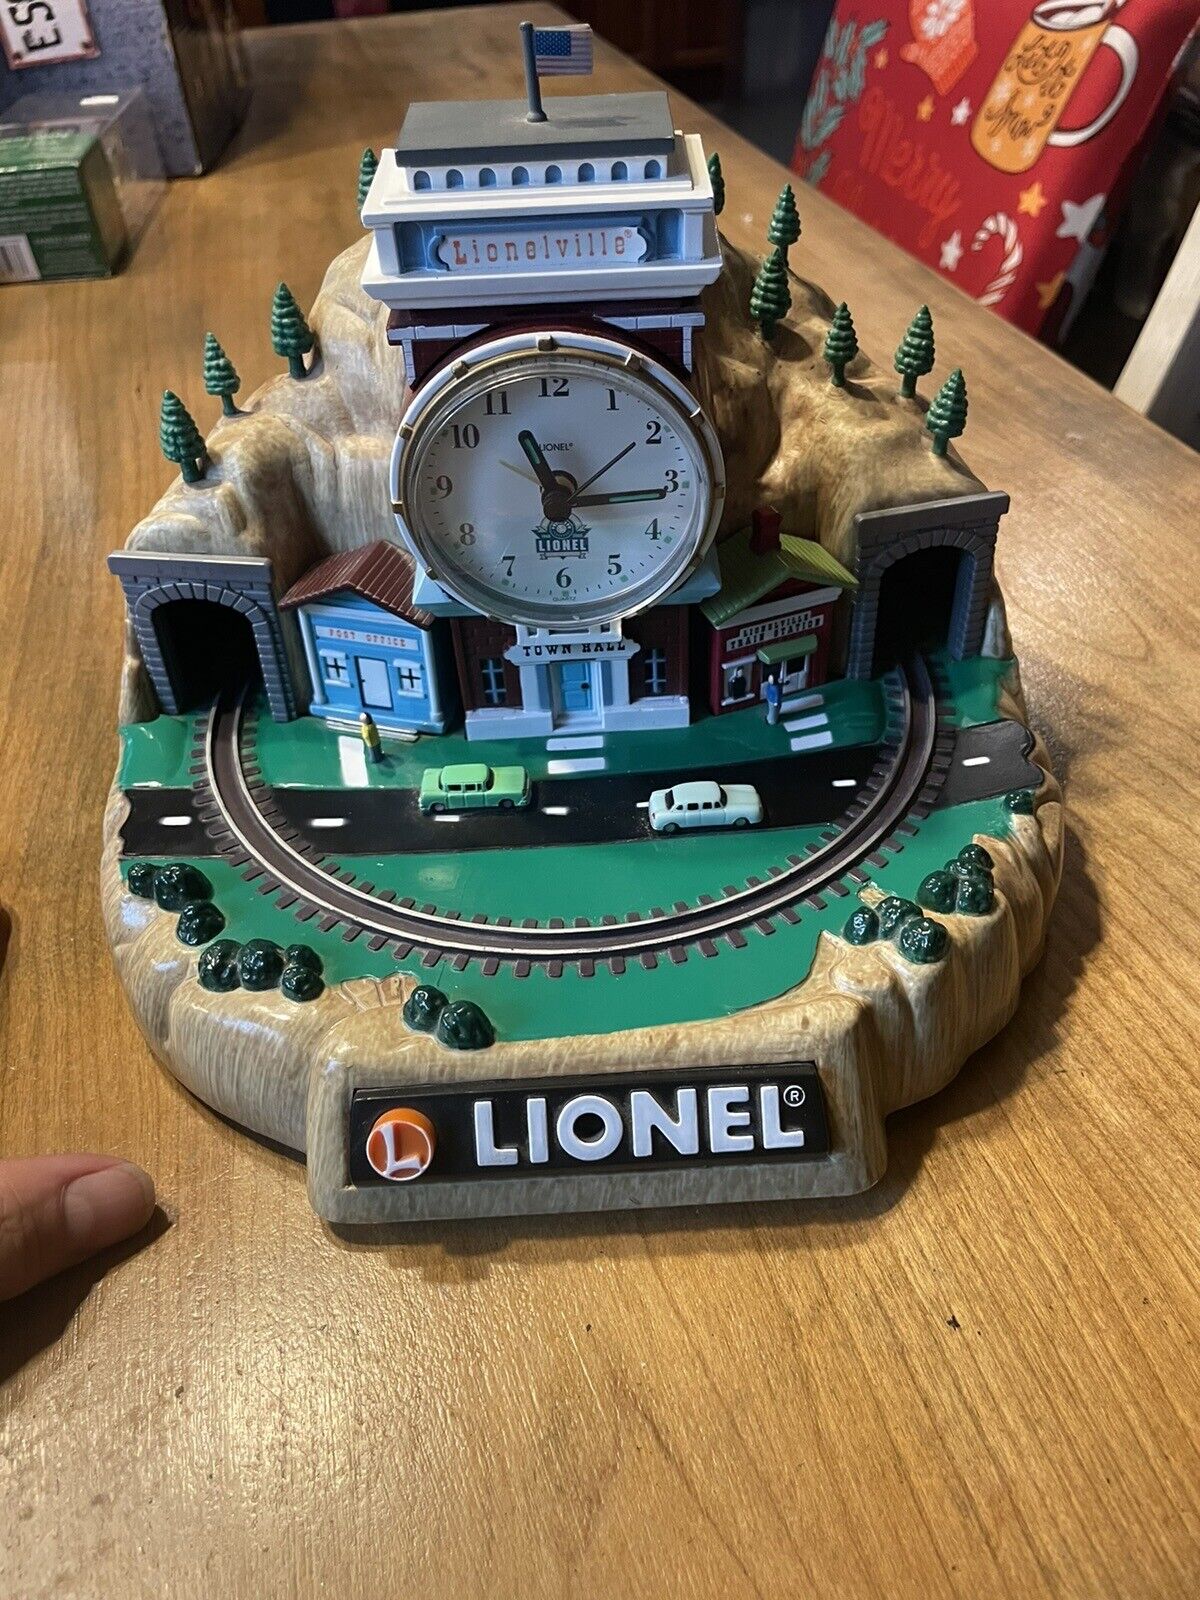 Lionel 100th Anniversary Talking Train Alarm Clock Missing Trains